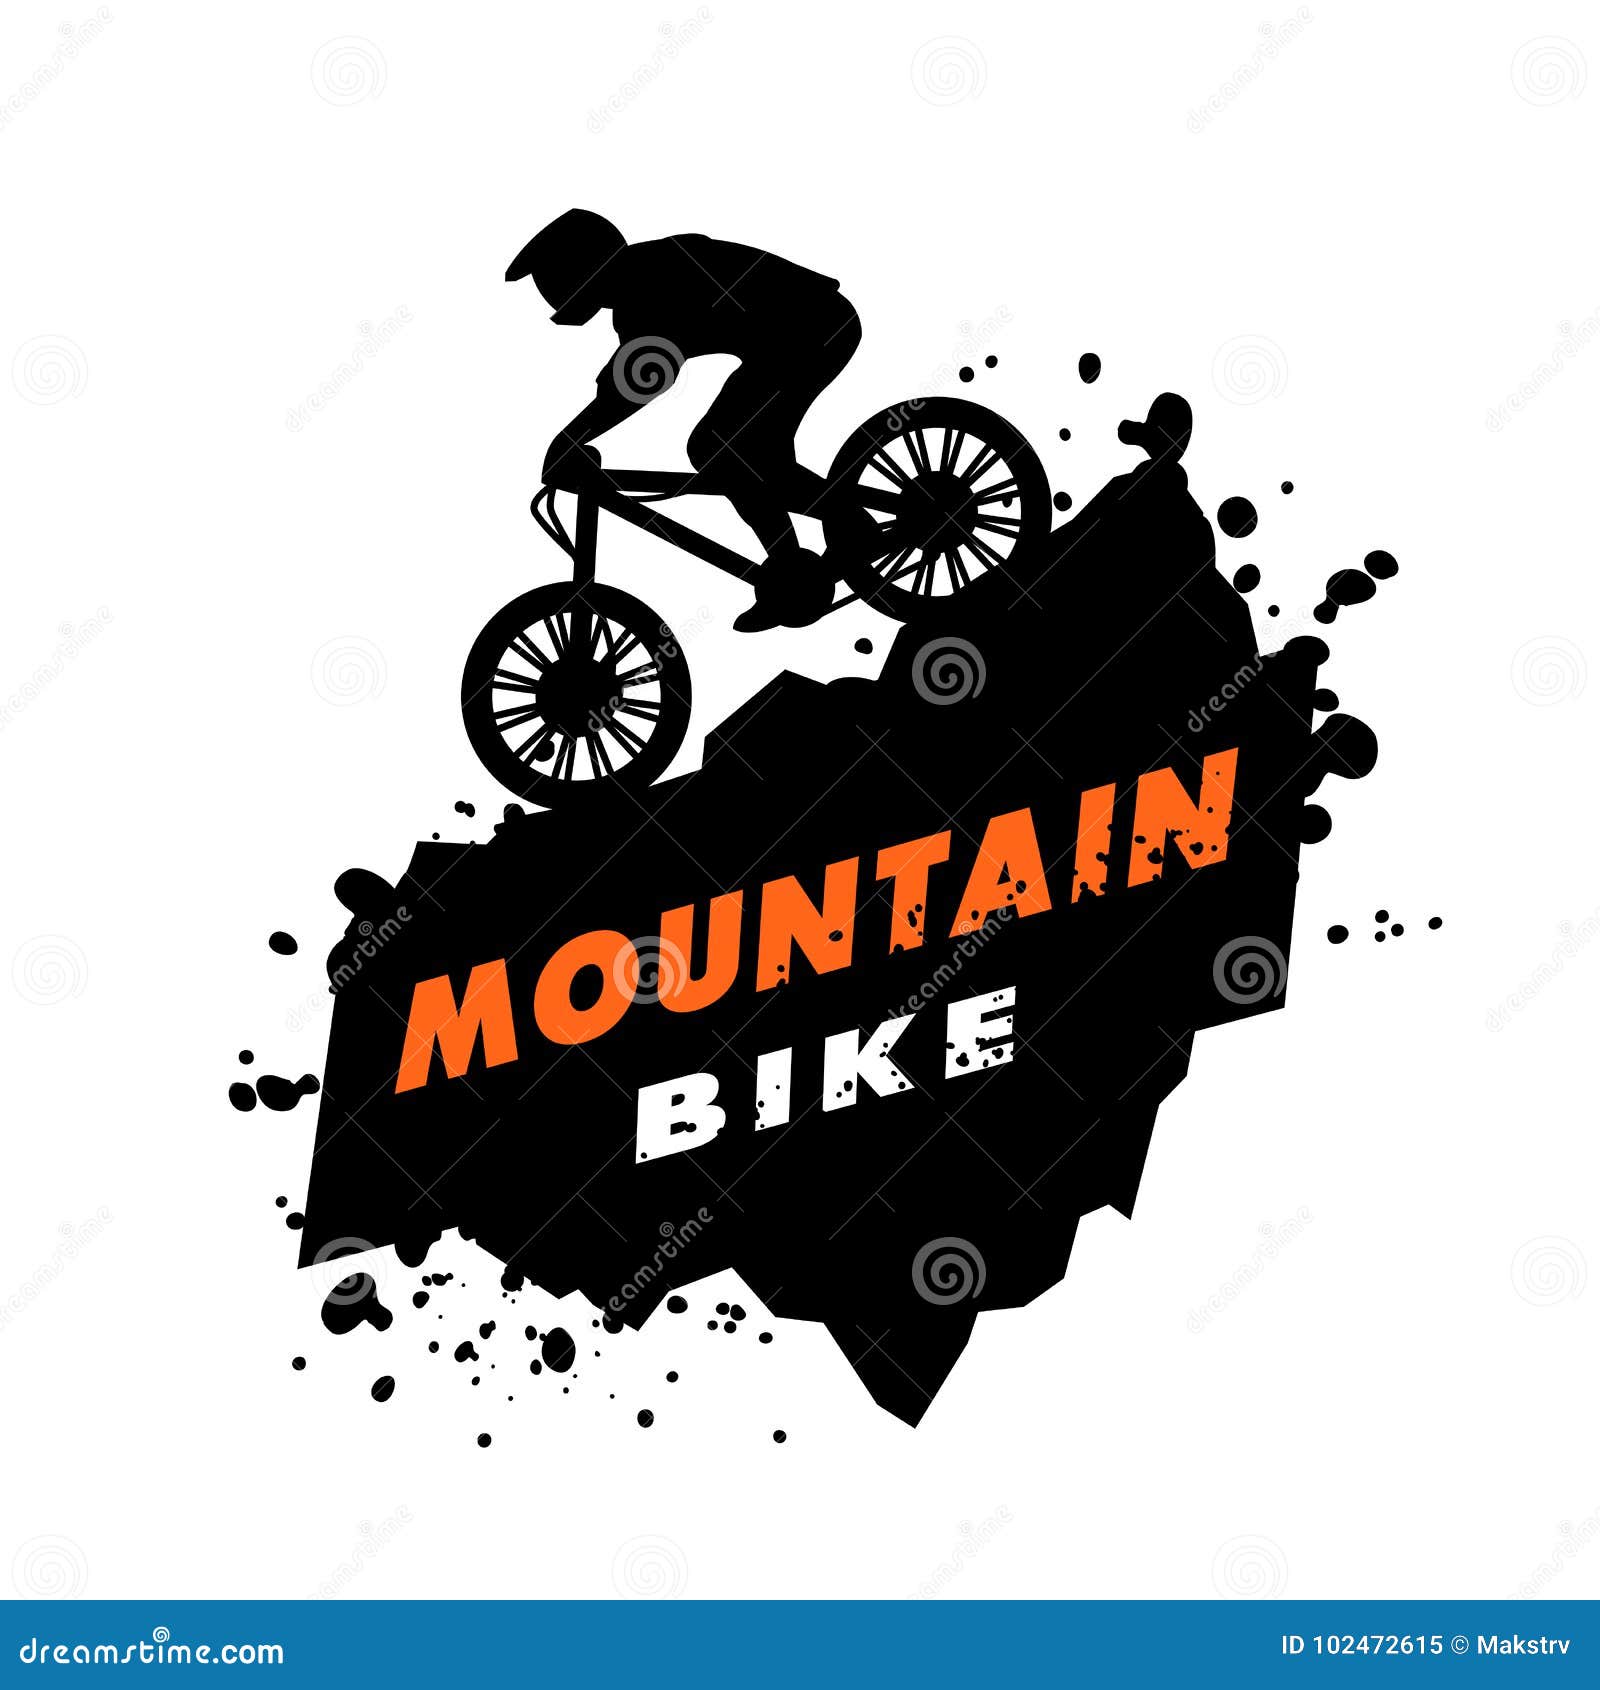 mountain bike trials emblem.